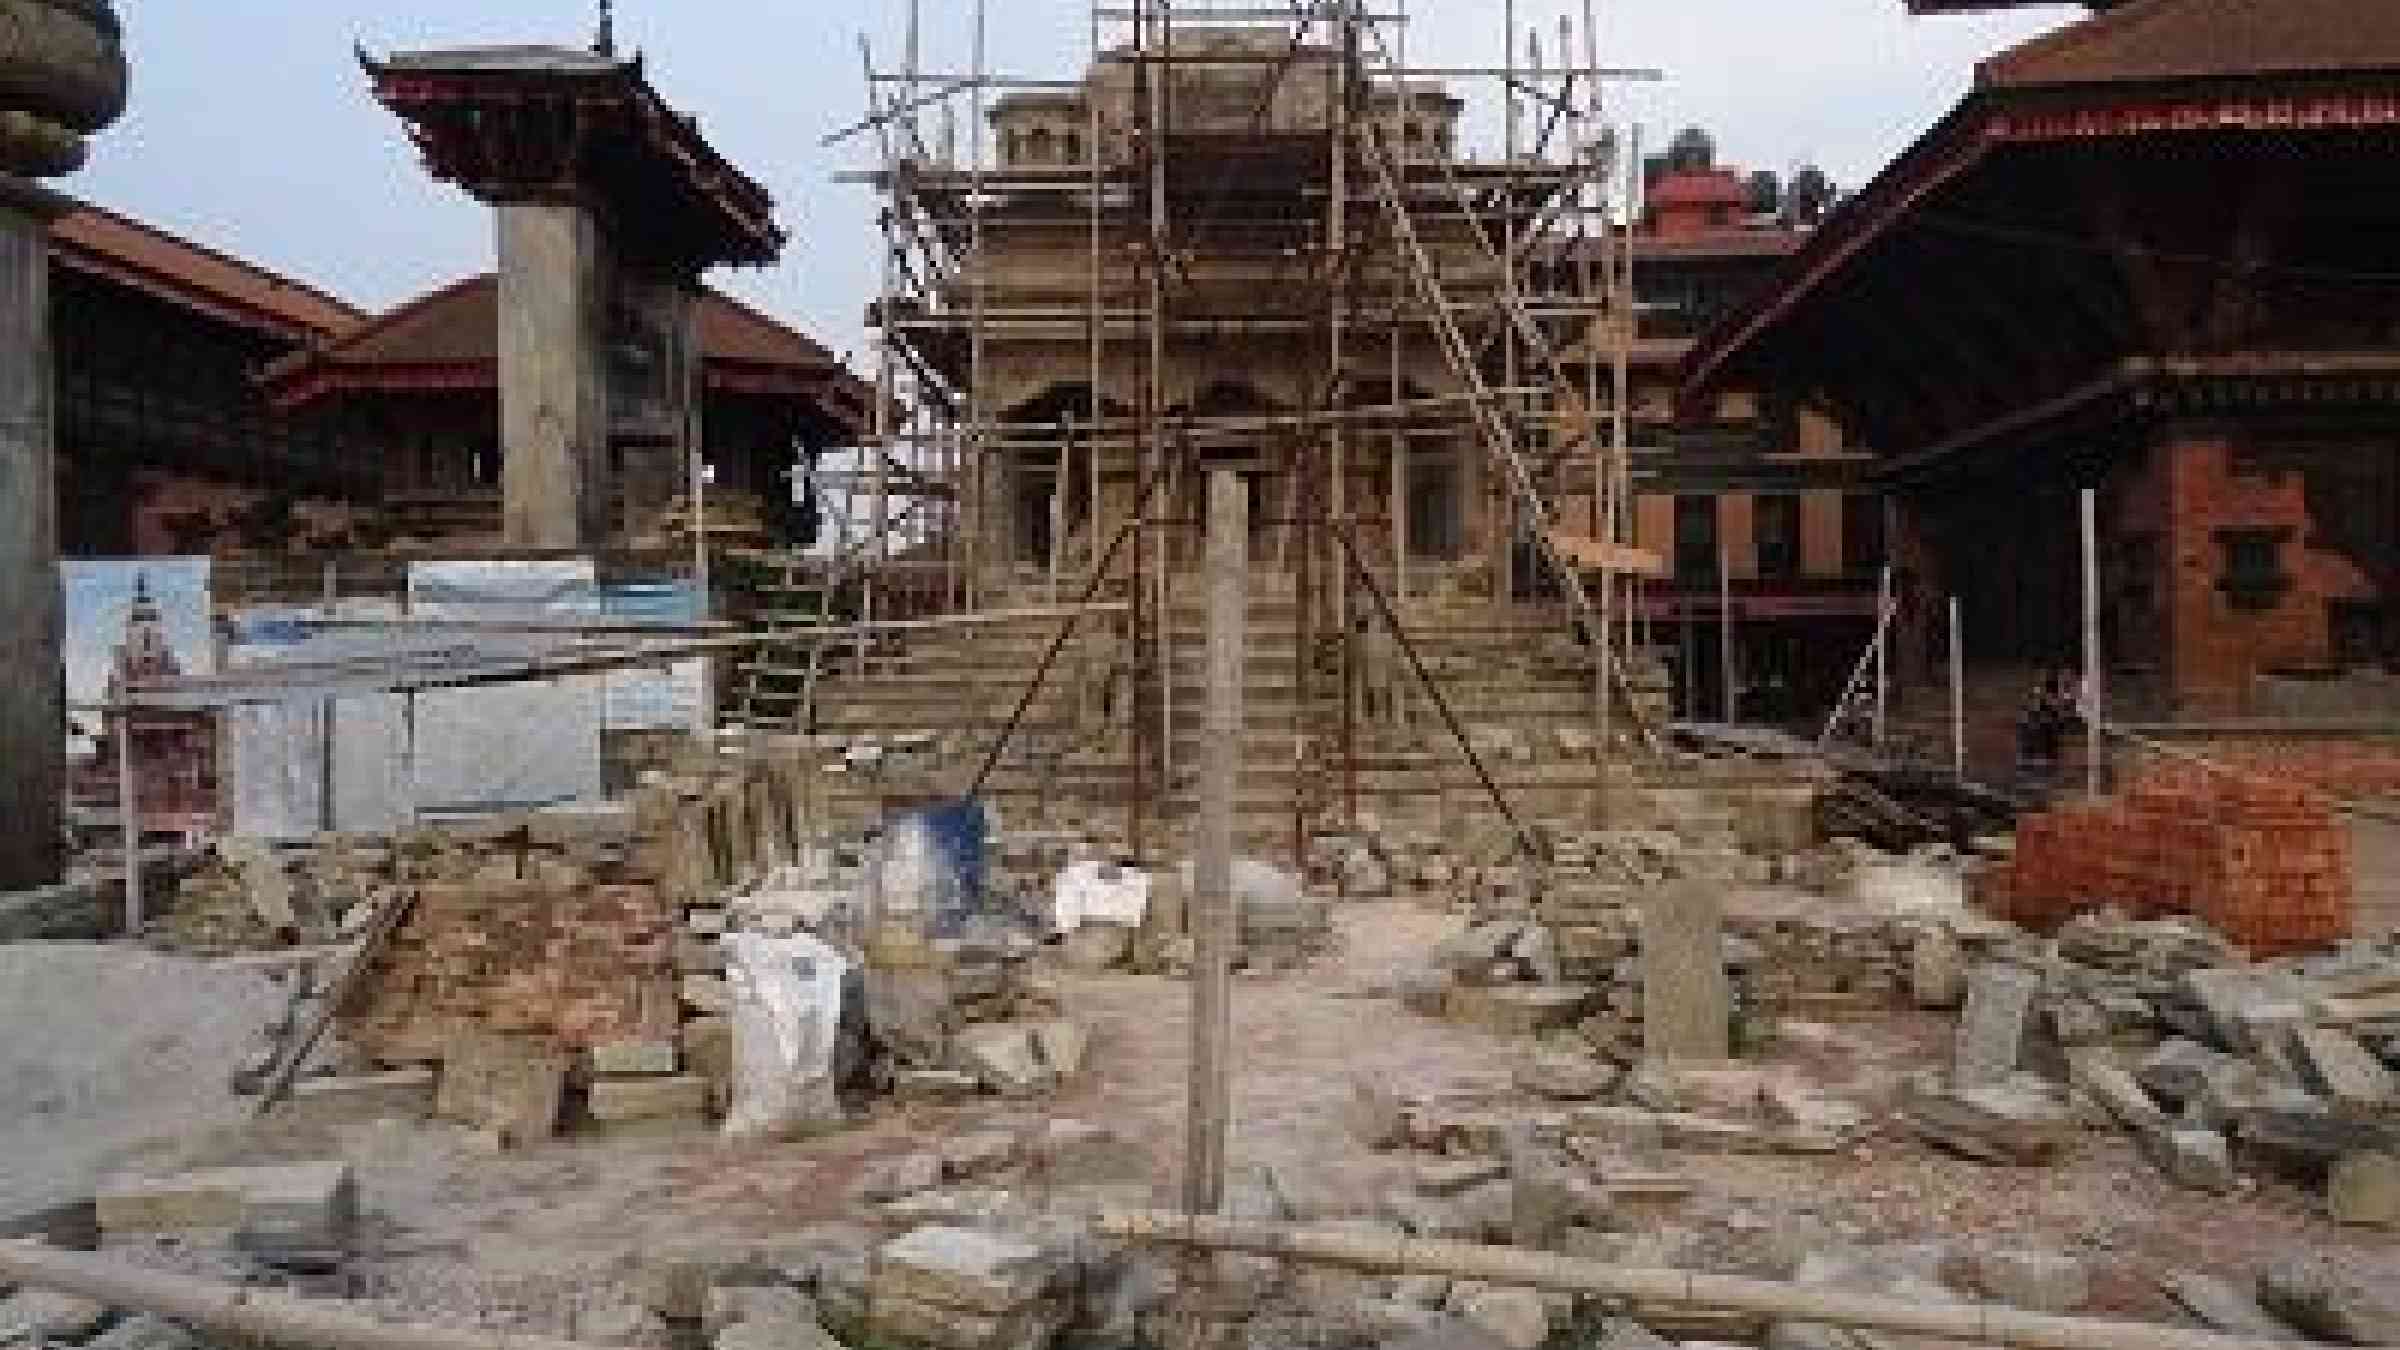 The 2015 earthquake caused extensive damage to the Nepal capital, Kathmandu